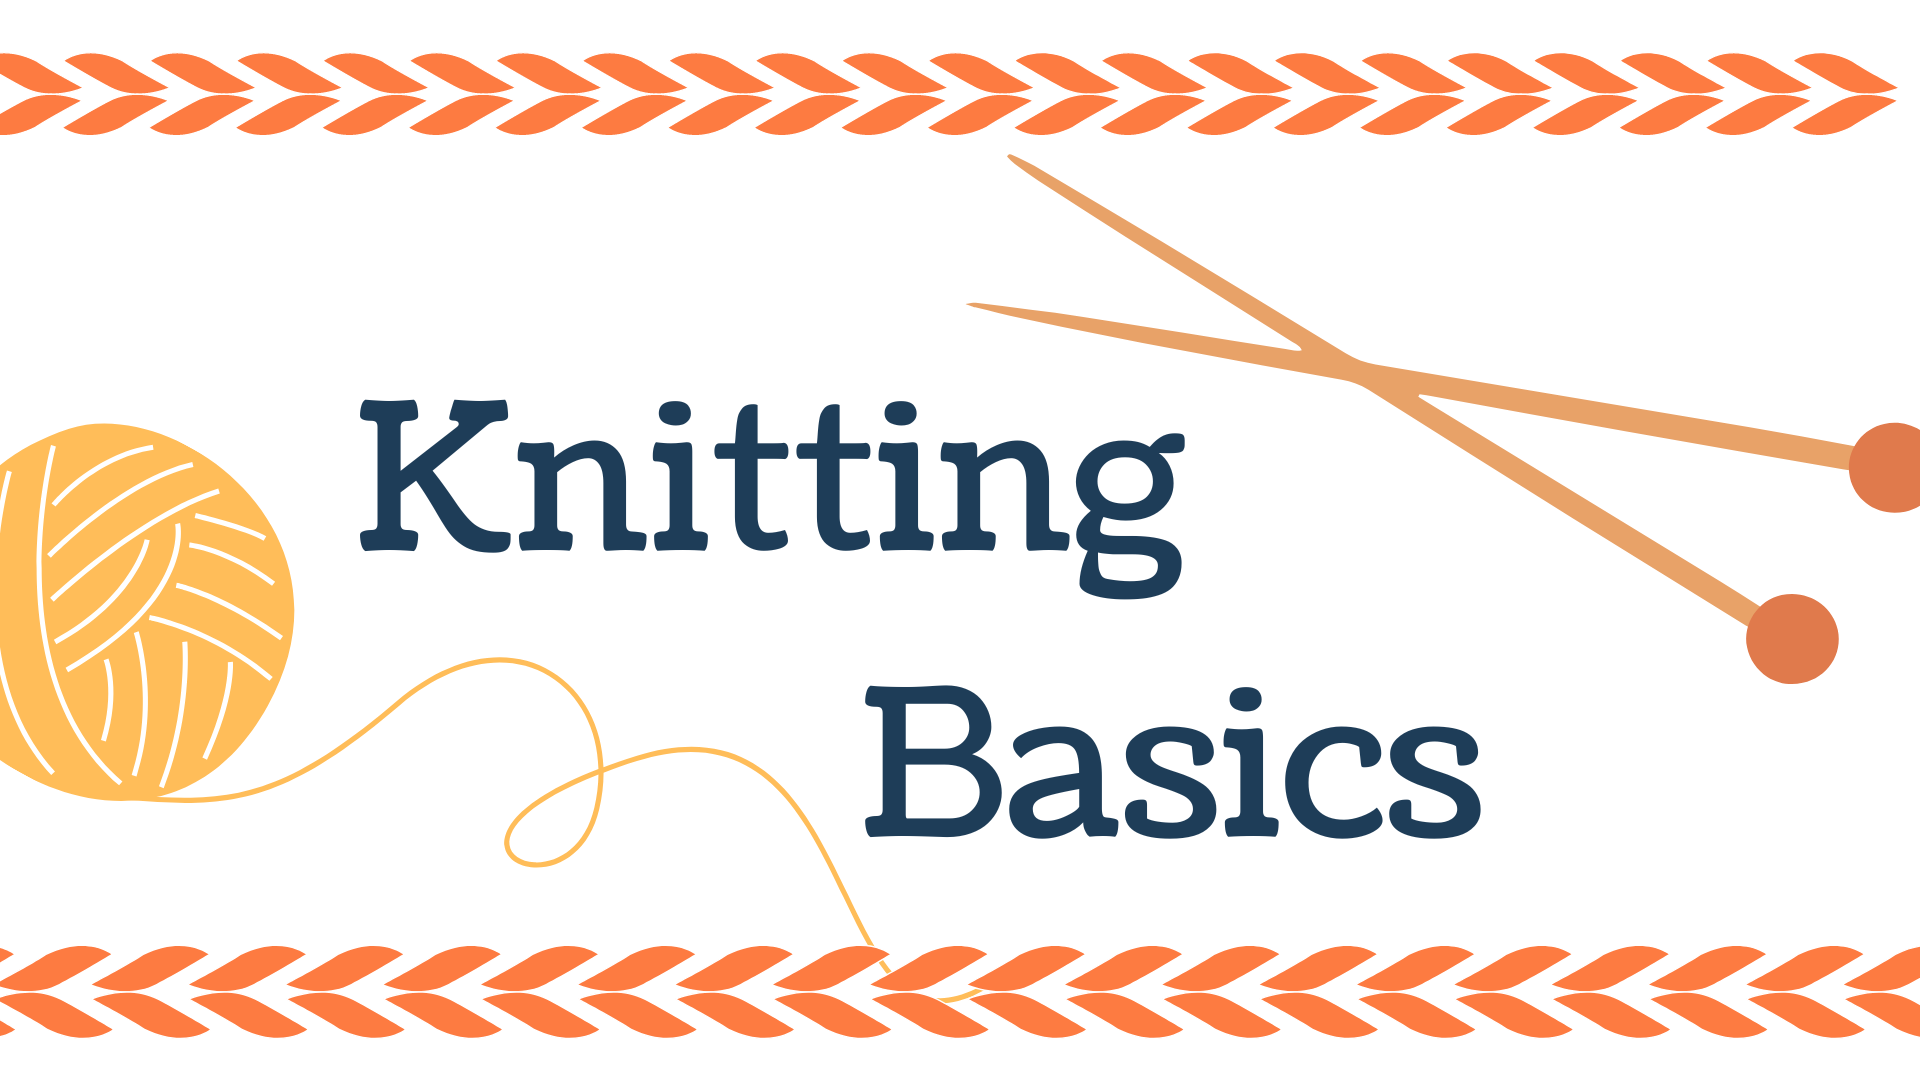 Knitting needles, yarn and stitches